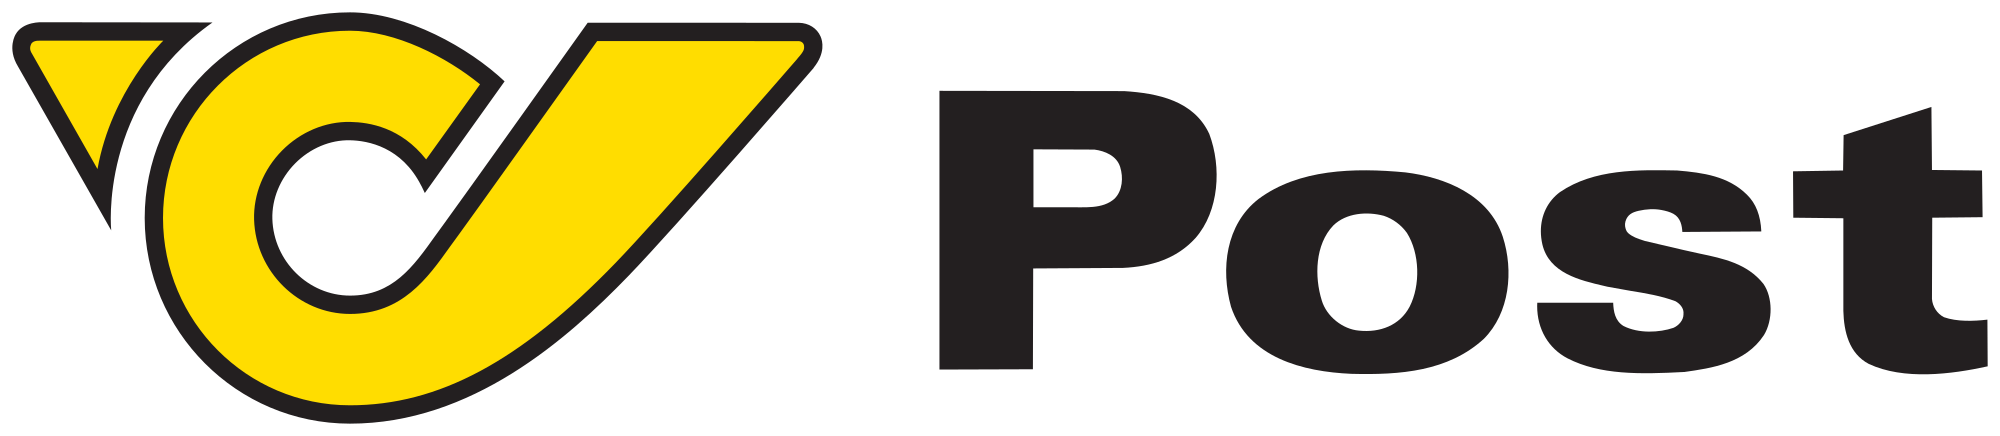 Austrian Post logo